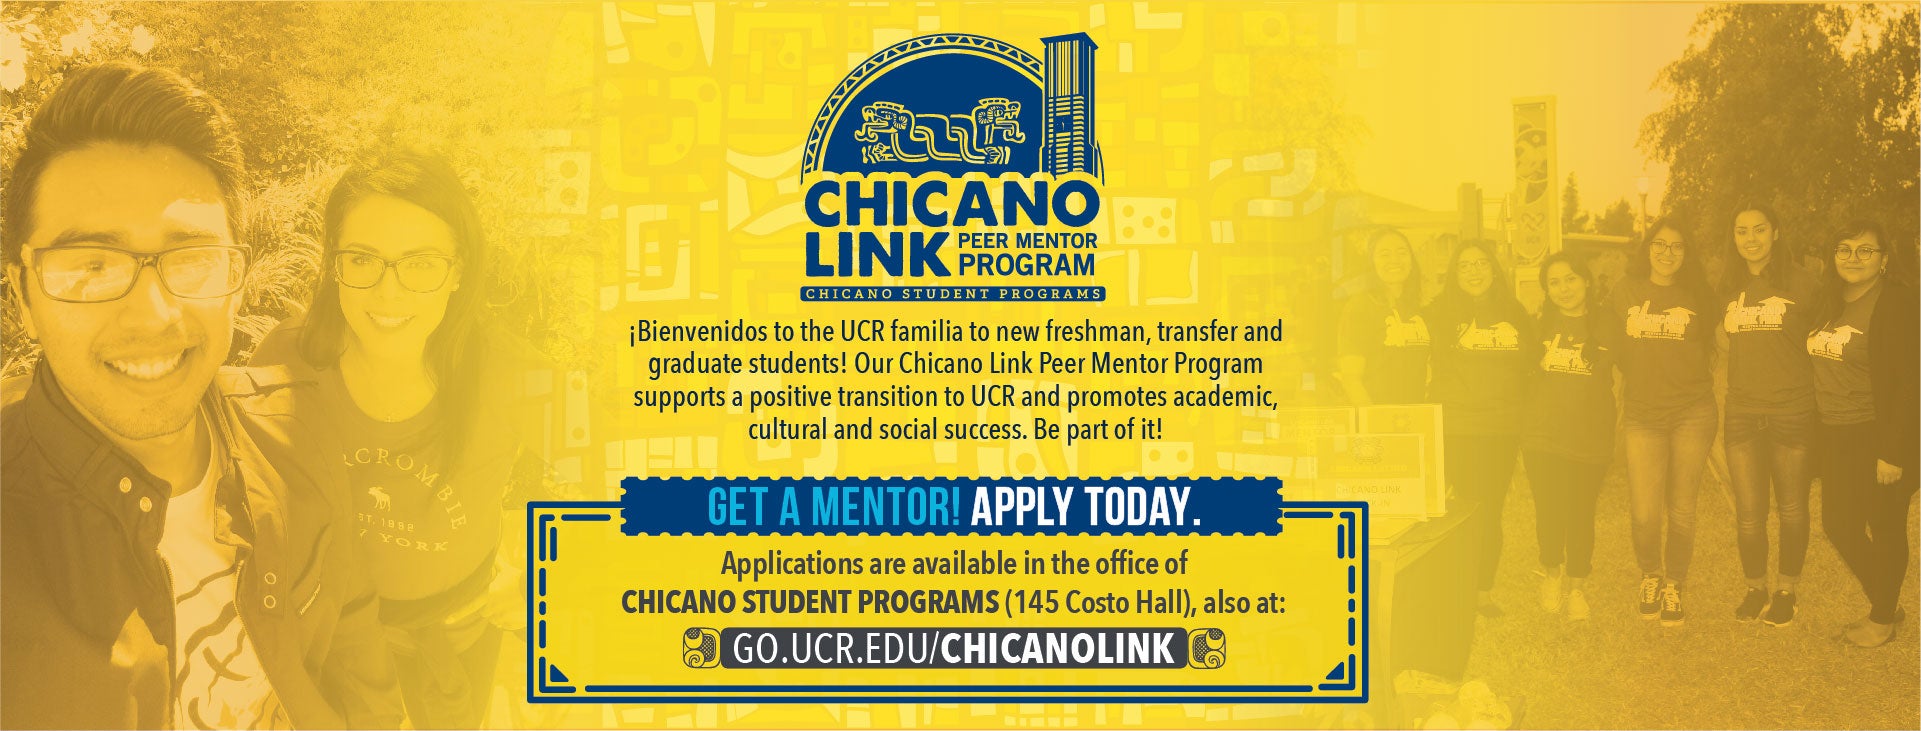 Chicano Link Peer Mentor Program, Get a Mentor! Apply Today at go.ucr.edu/chicanolink